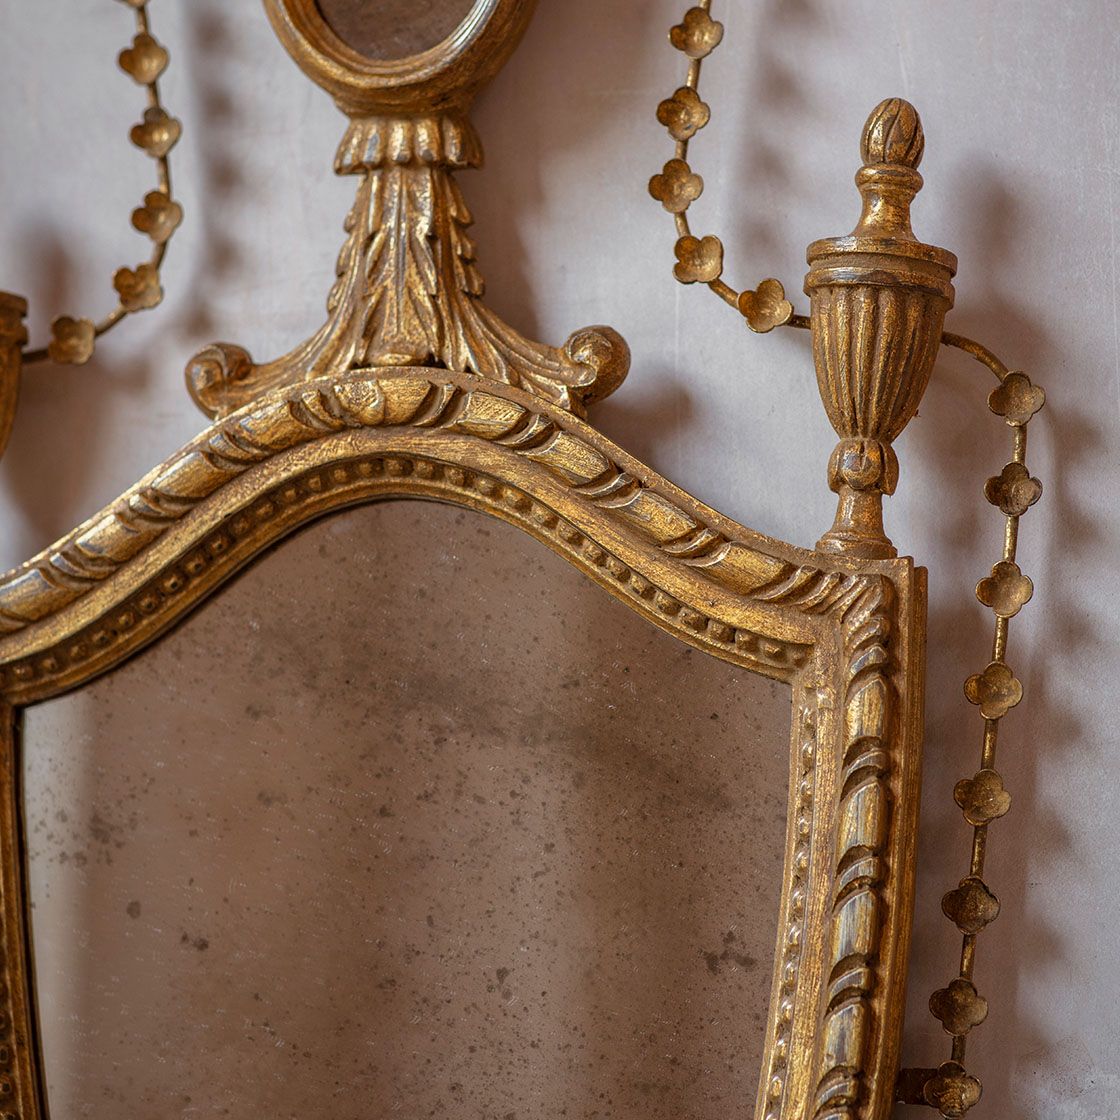 Catherine mirror in Burnt gold - Beaumont & Fletcher